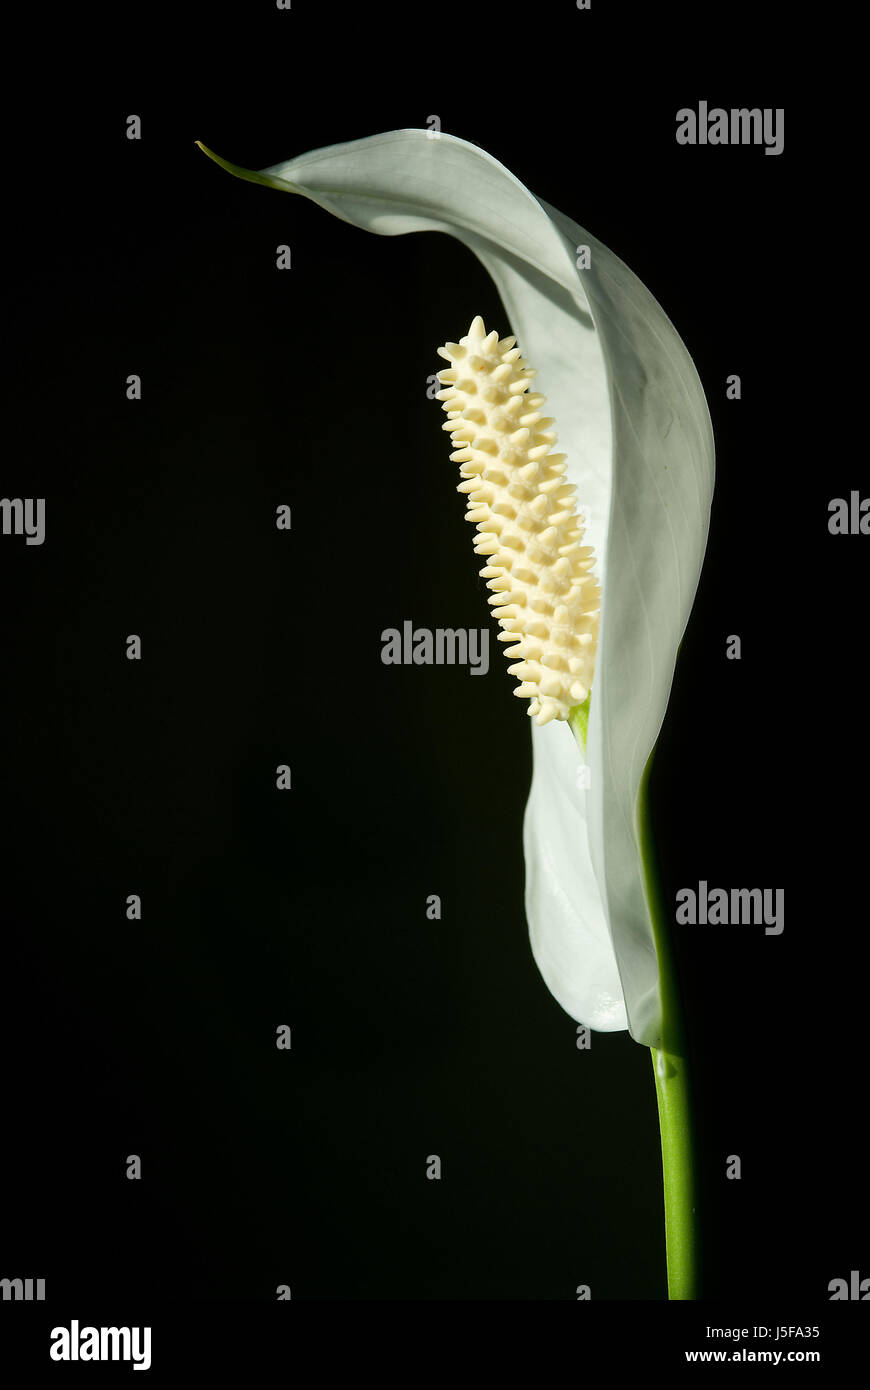 flower plant bloom blossom flourish flourishing botany blank european caucasian Stock Photo